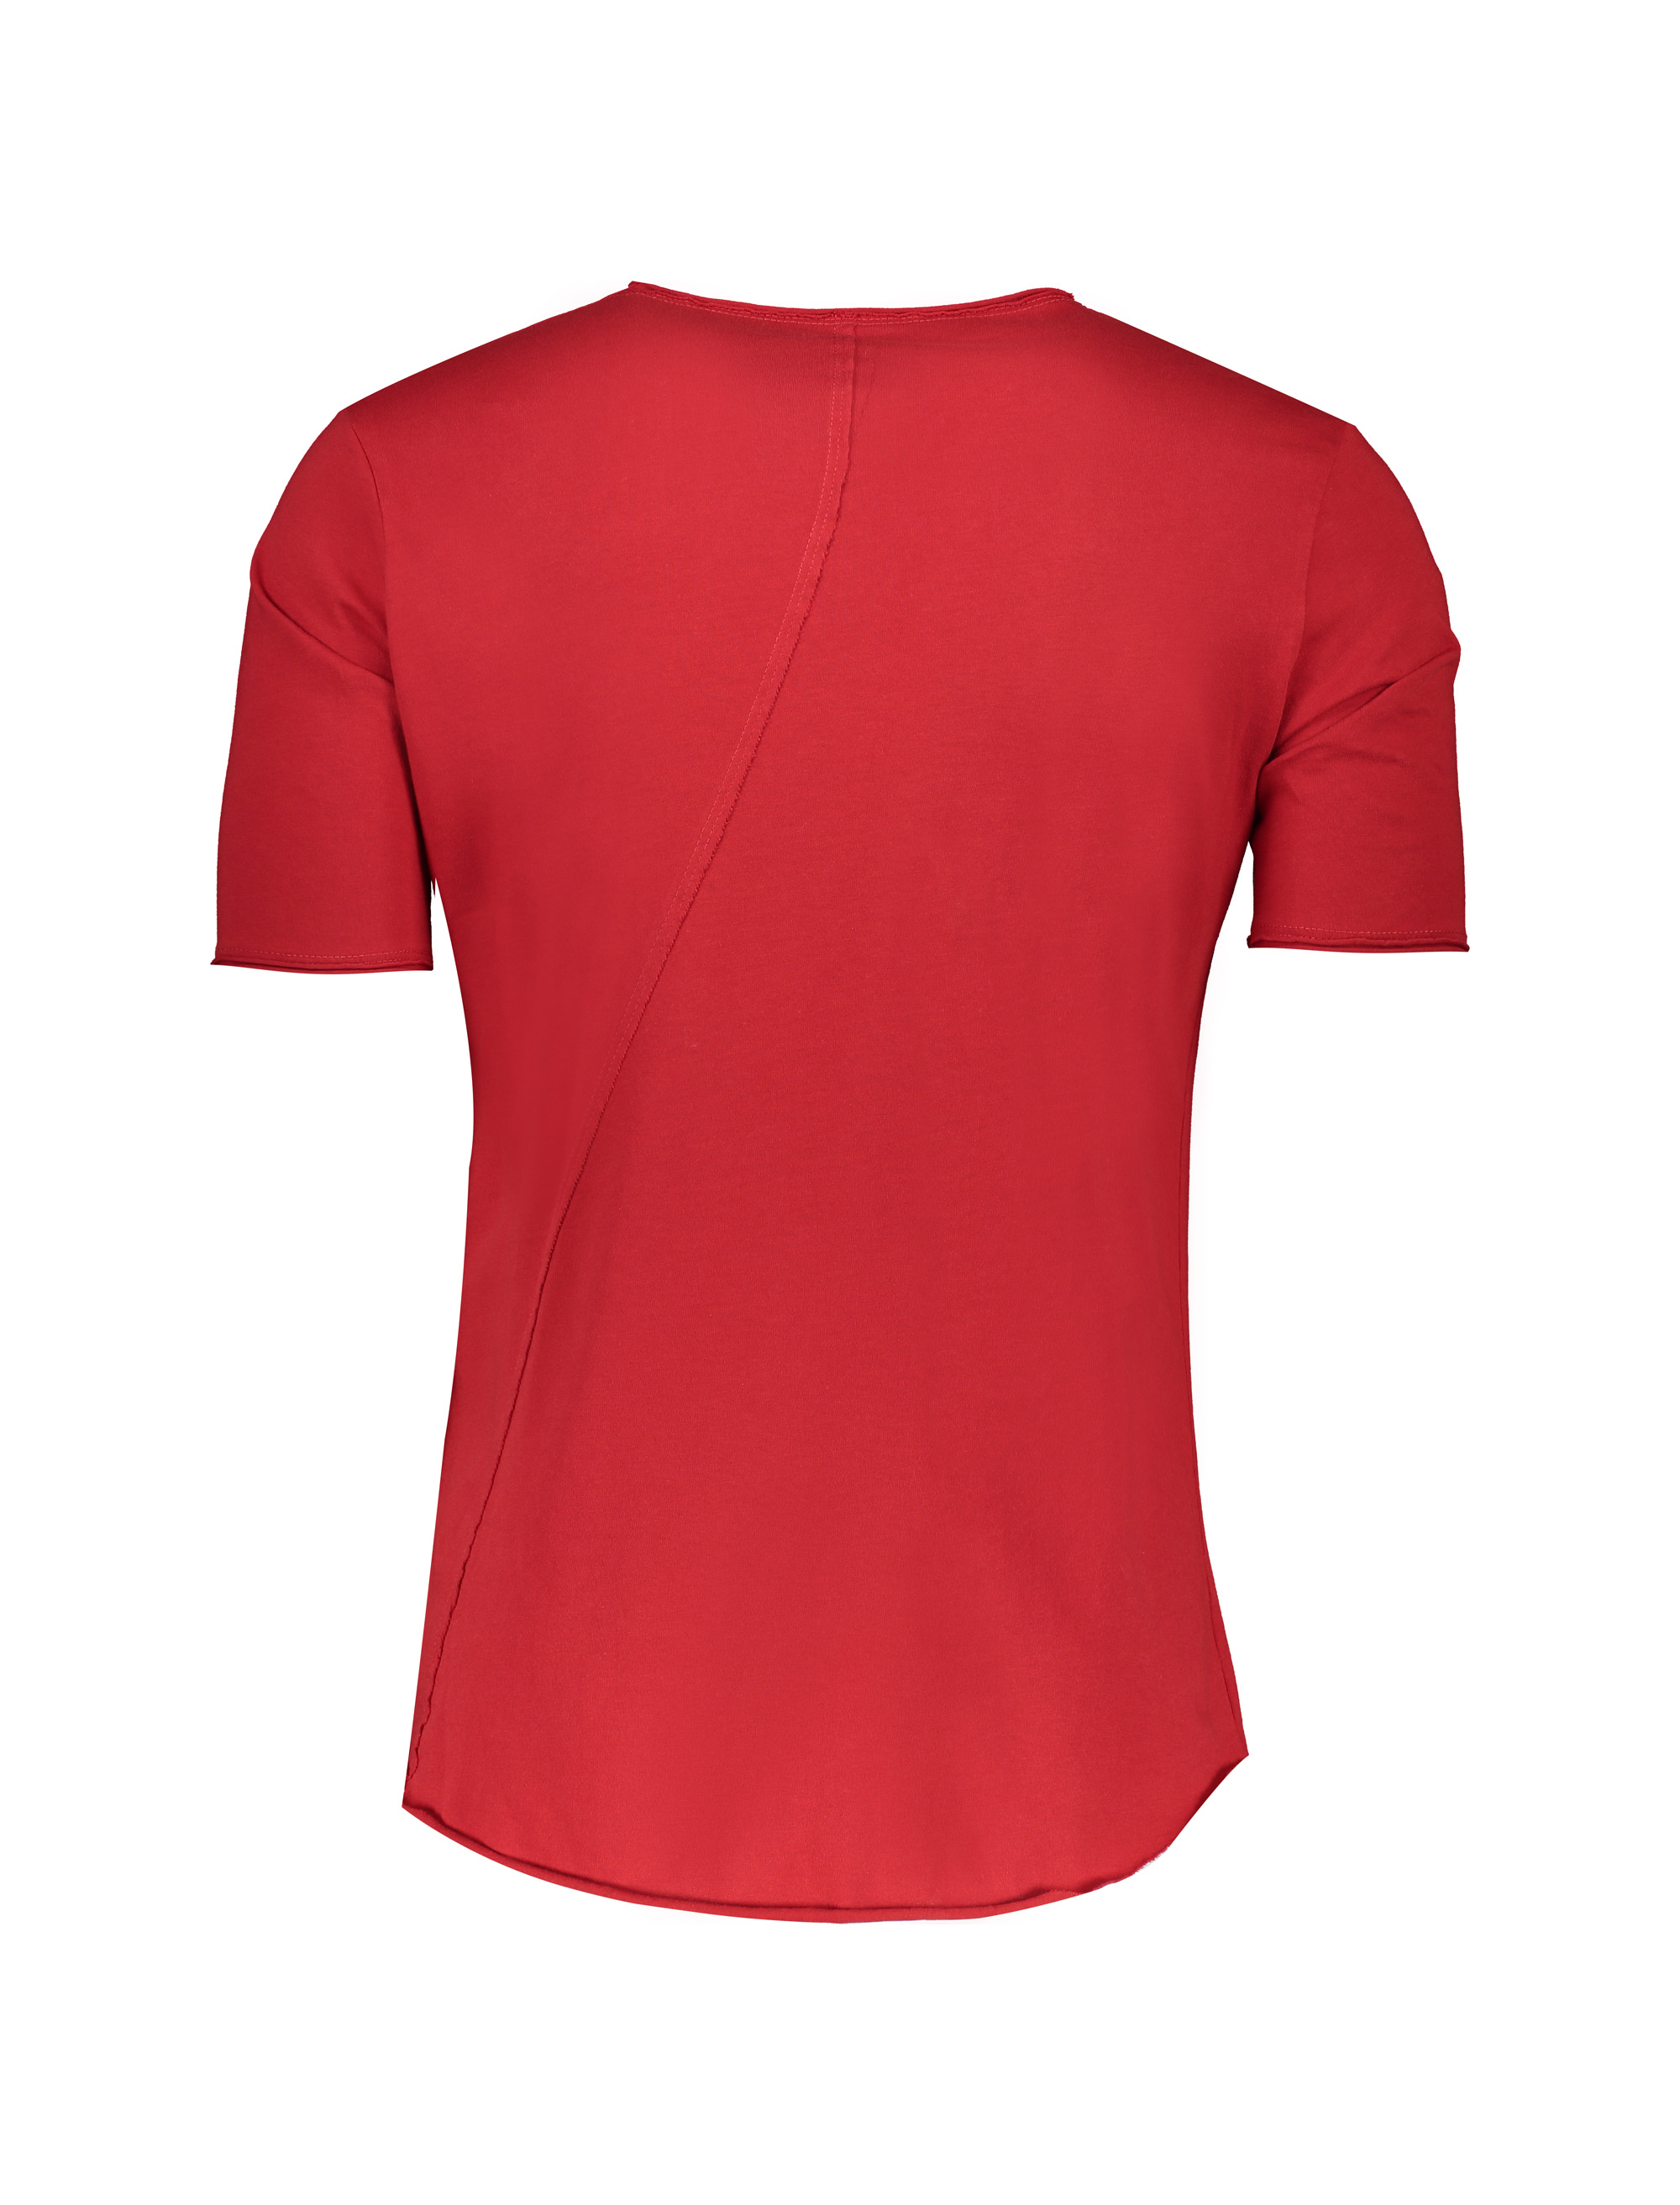 تی شرت نخی یقه گرد مردانه - امپریال